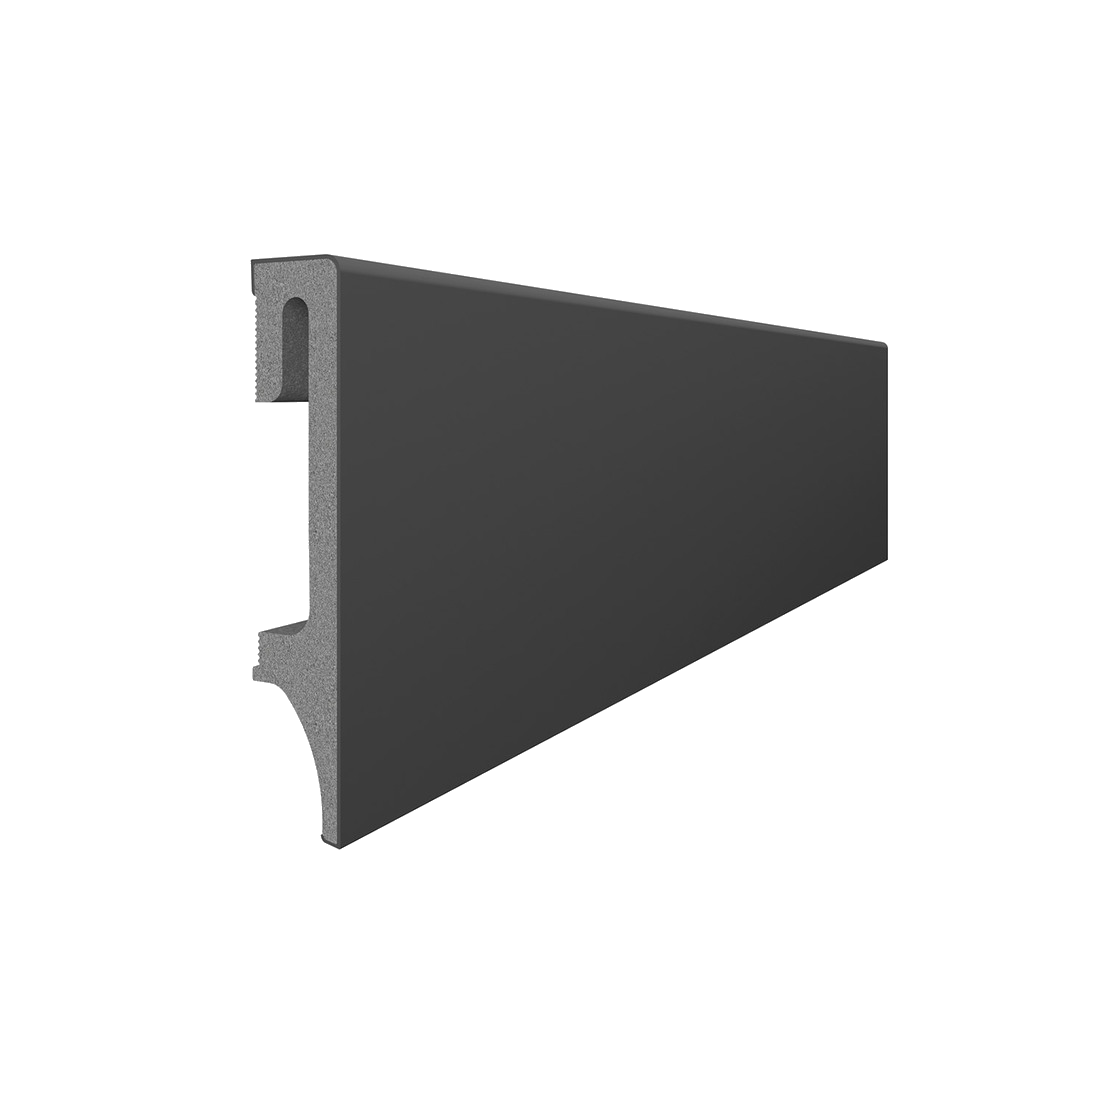 Vox Skirting Board 80mm - Anthracite